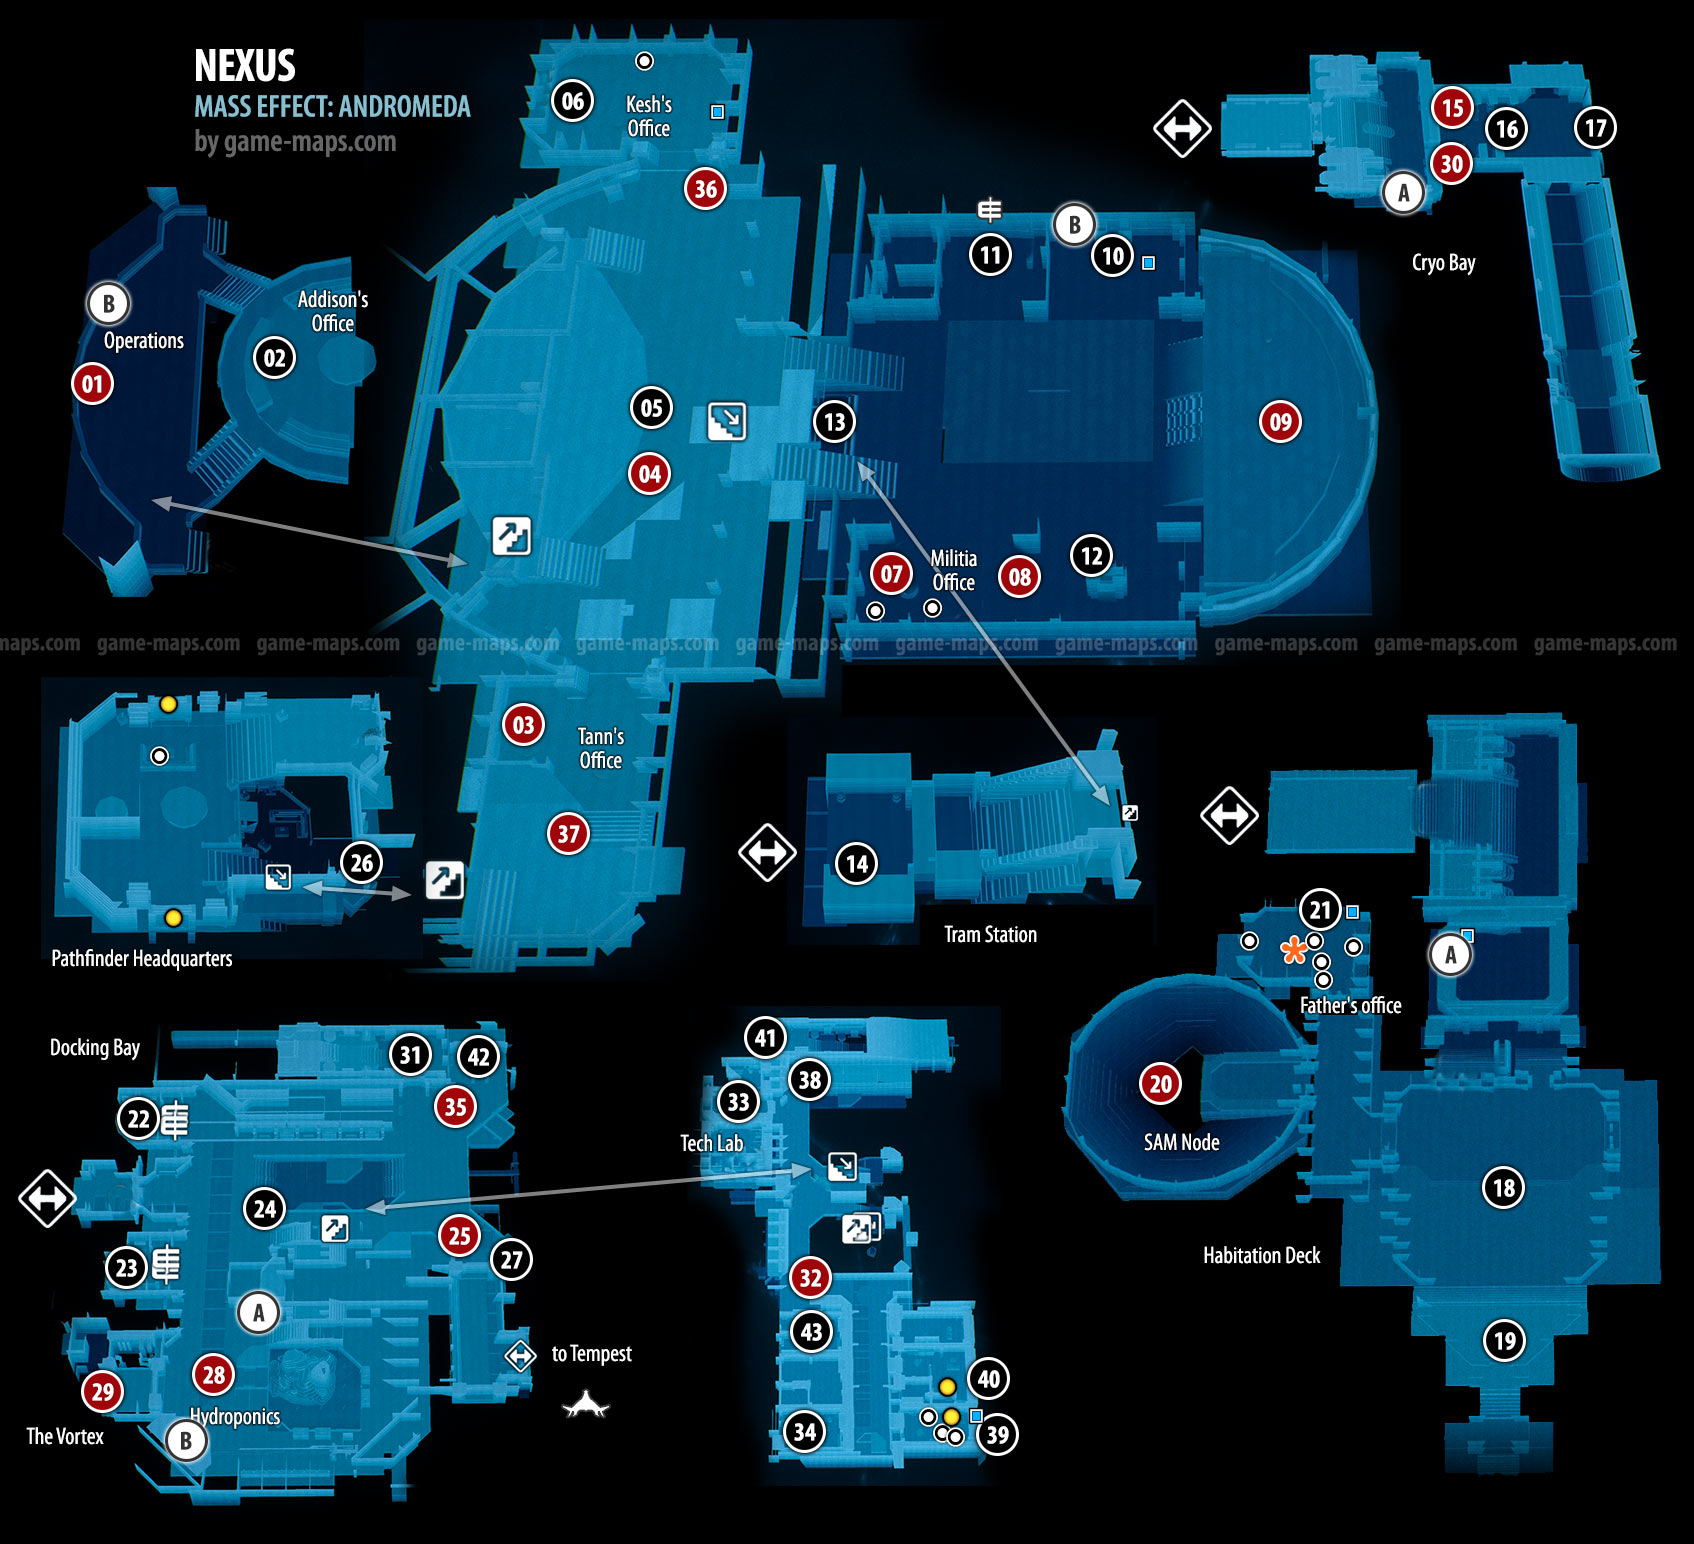 Nexus Map for Mass Effect Andromeda